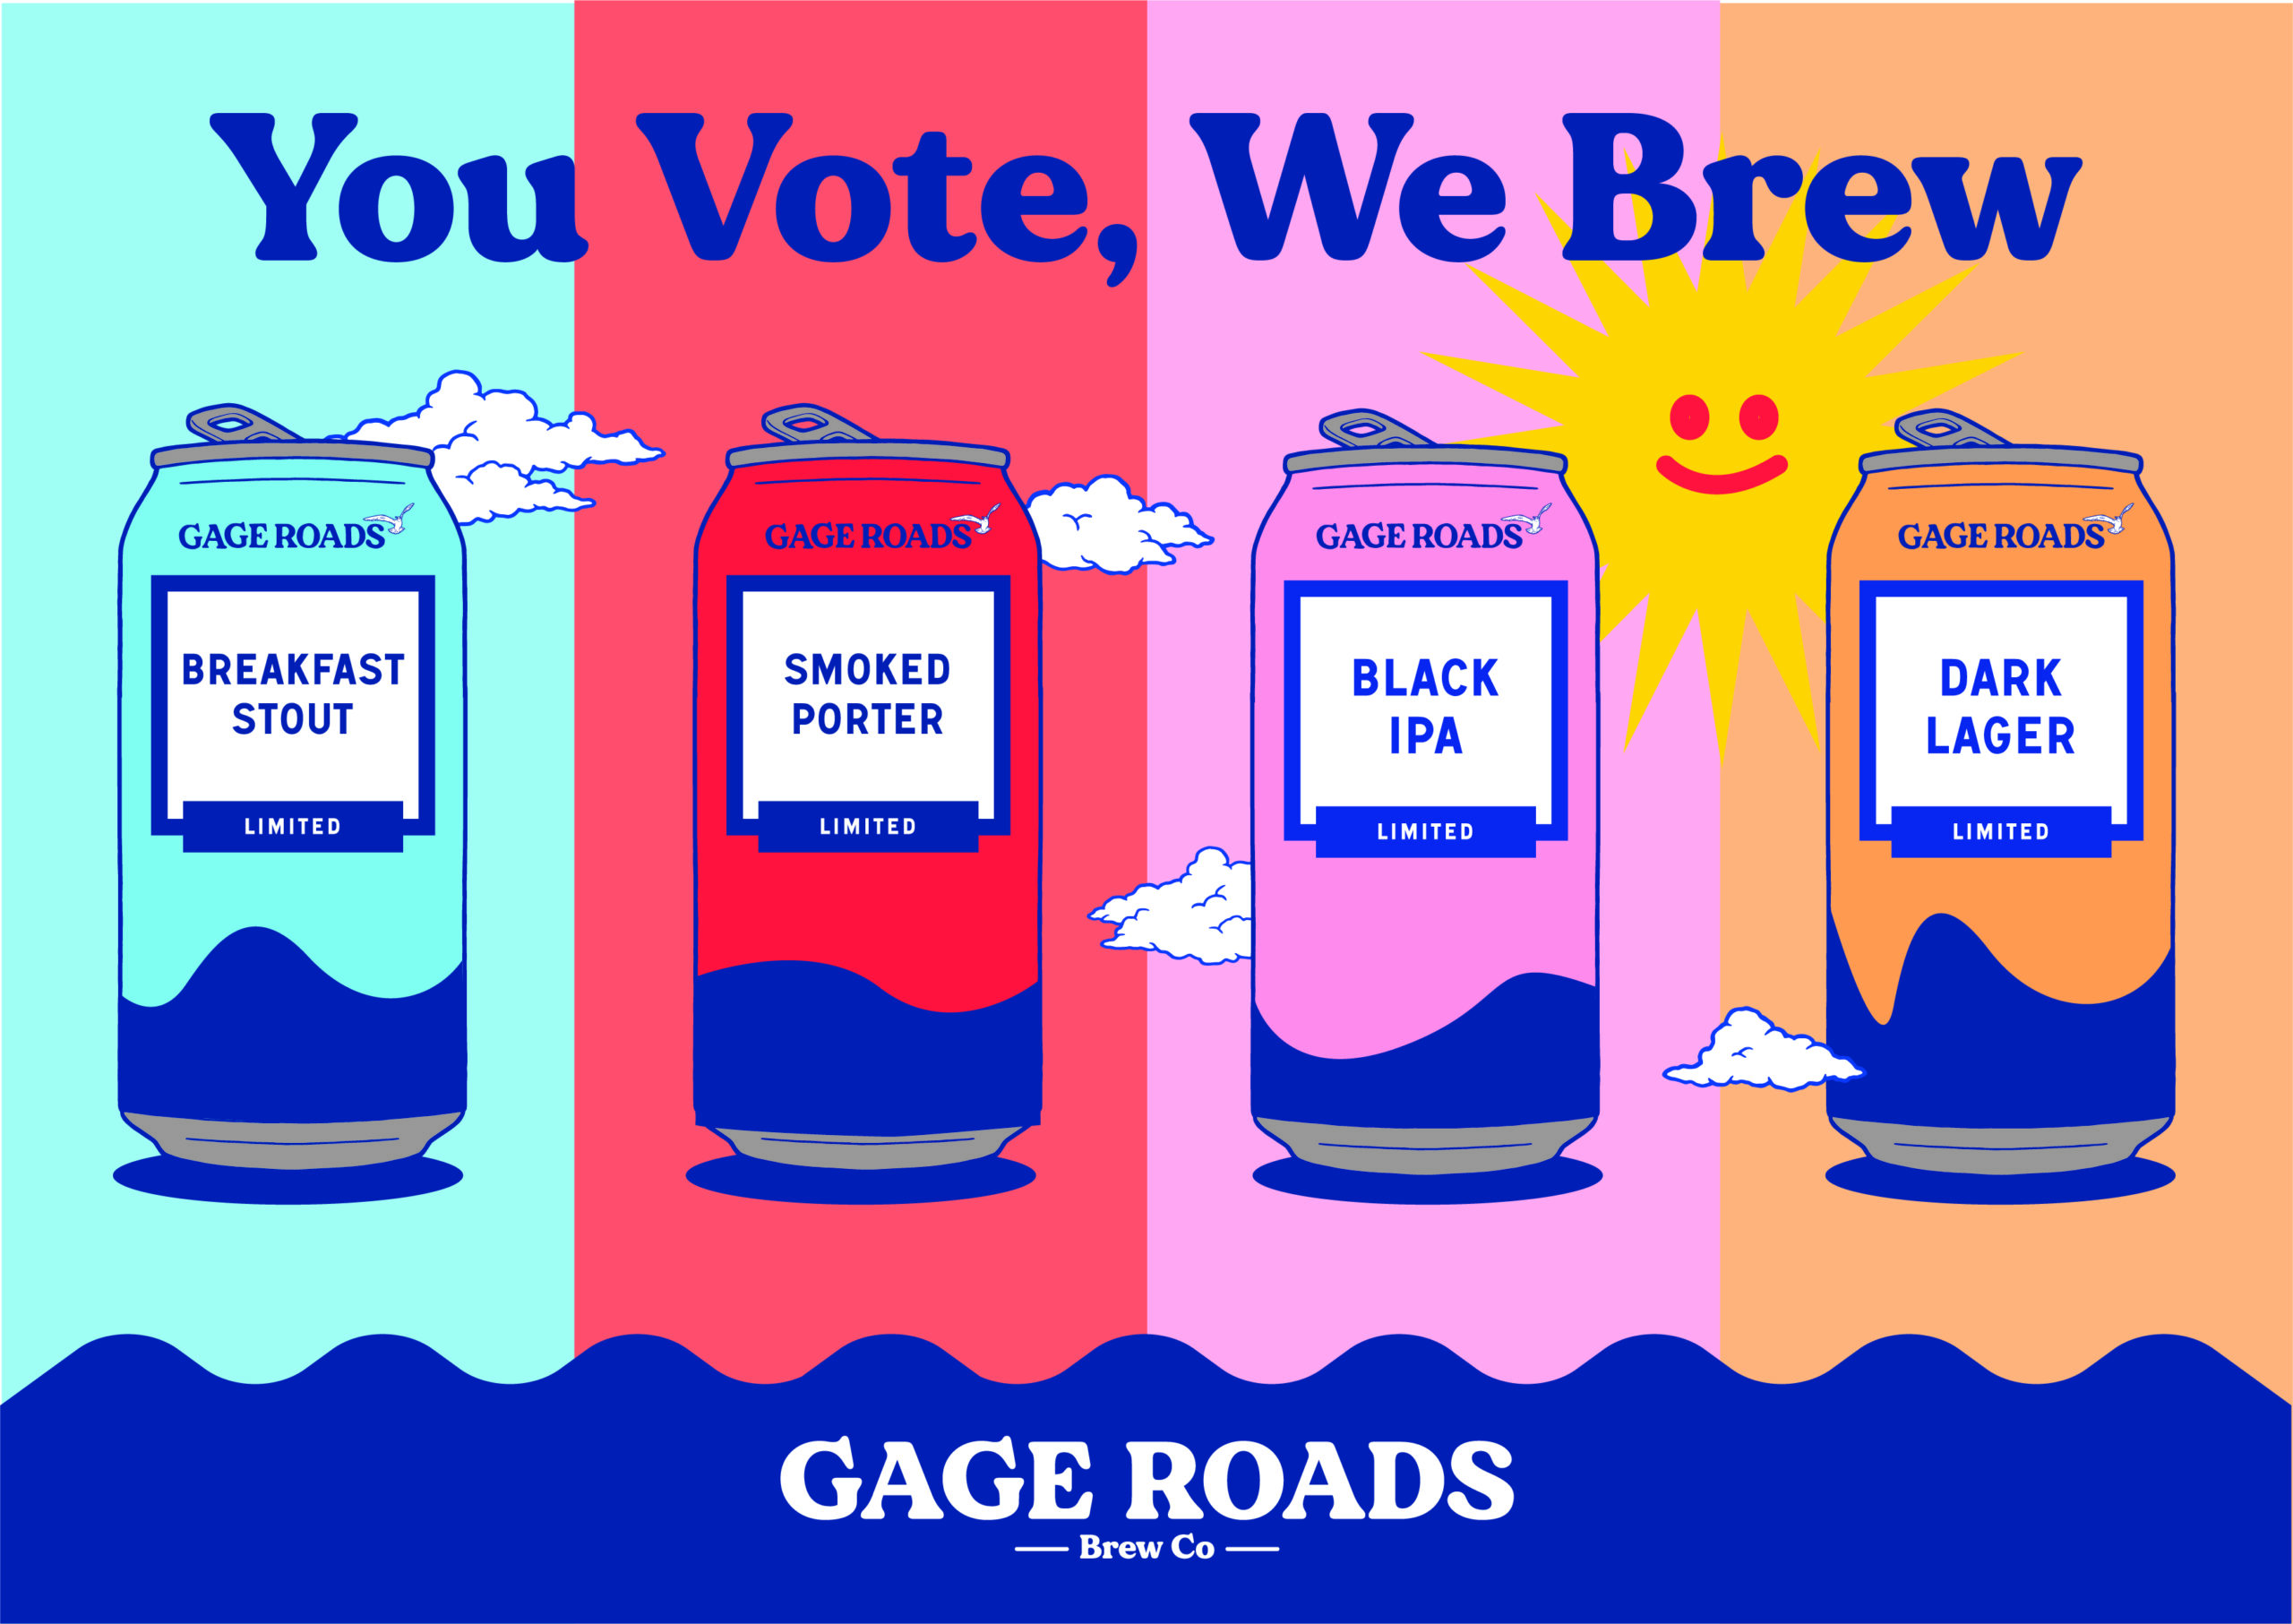 You Vote, We Brew